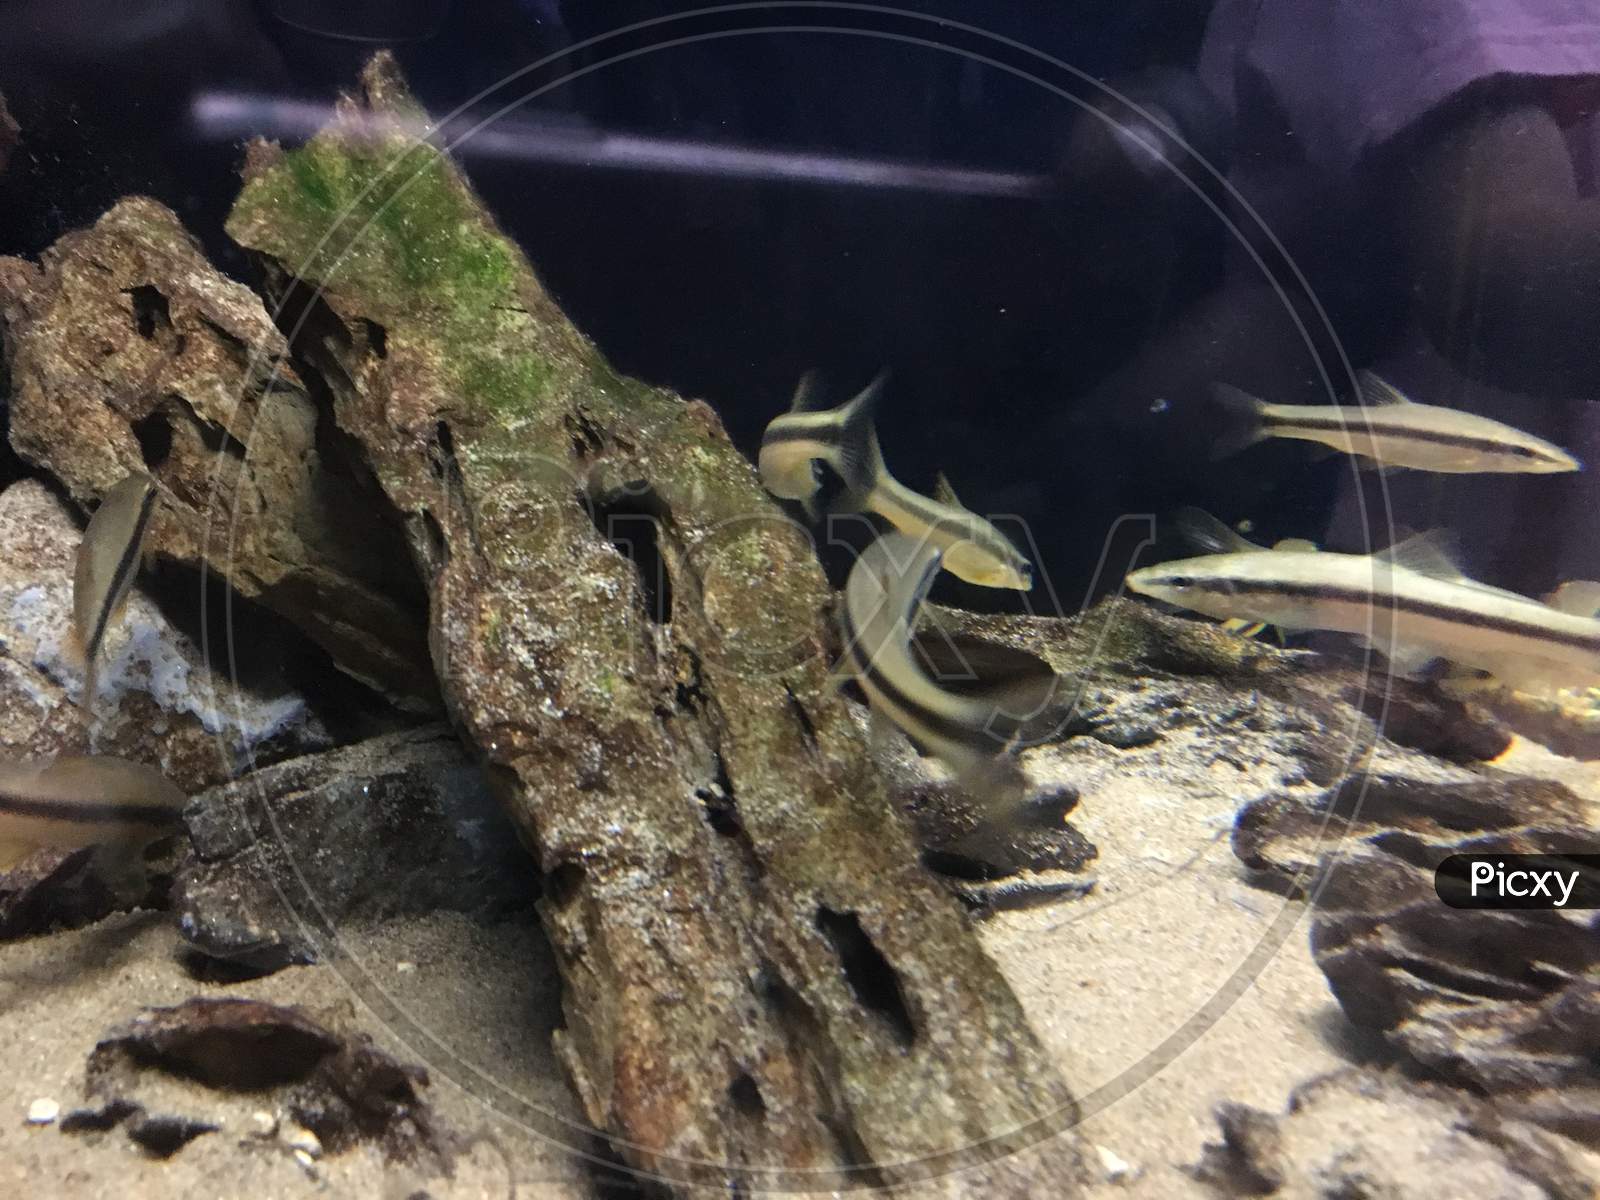 Fishes in an Aquarium